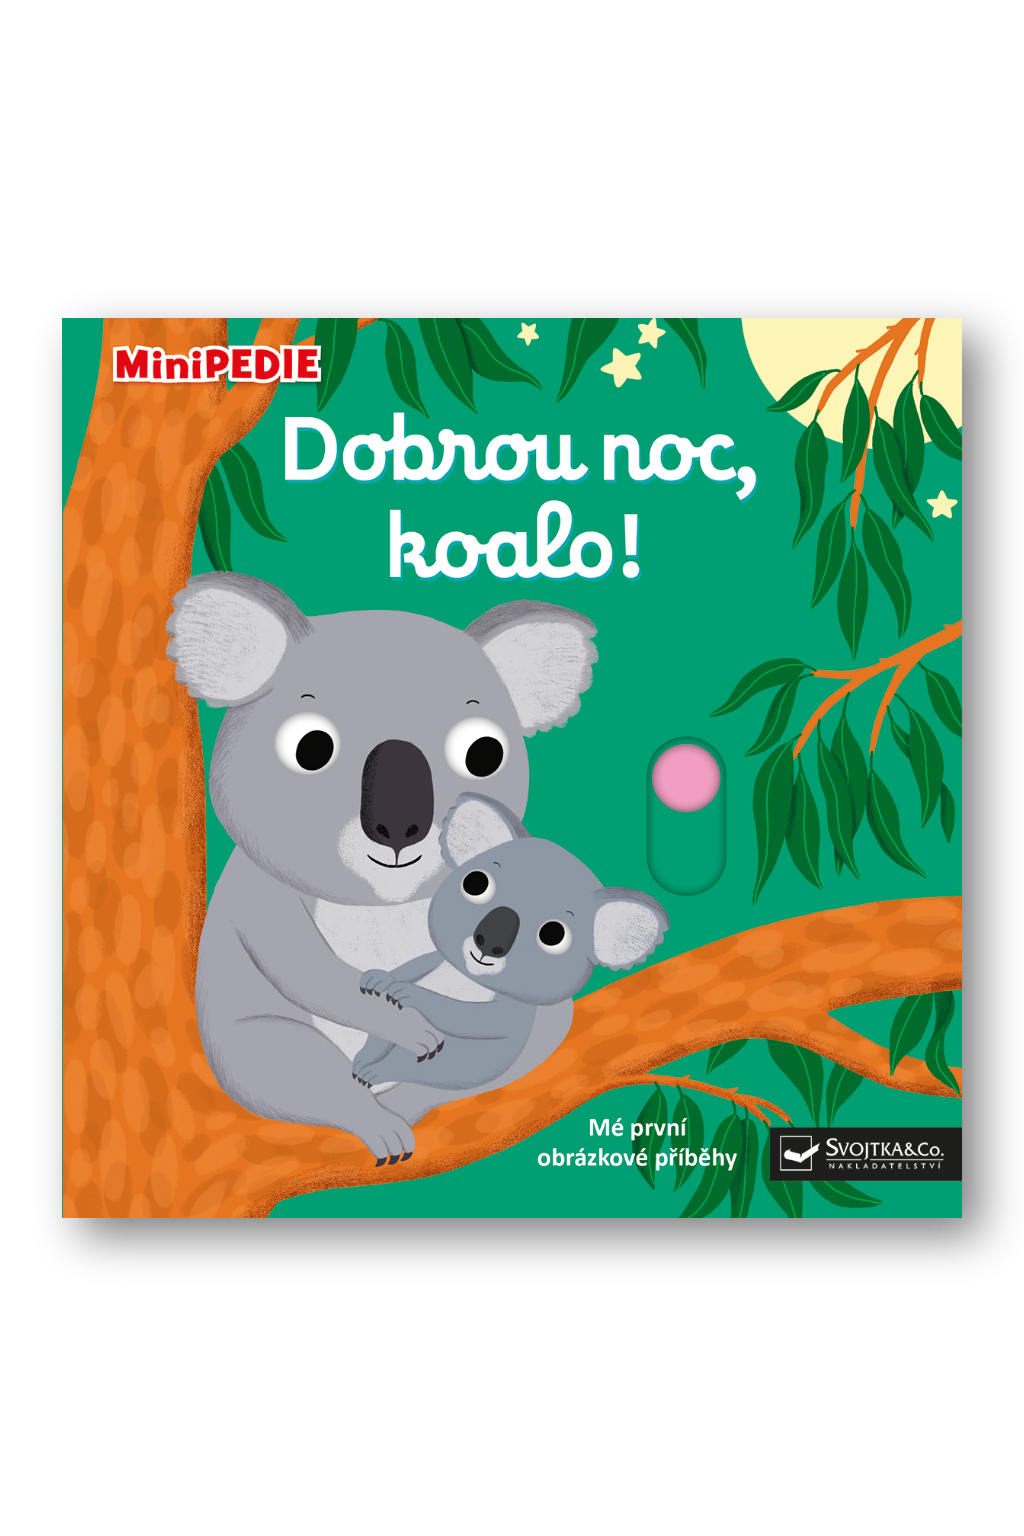 MiniPEDIE – Dobrou noc, koalo! Nathalie Choux